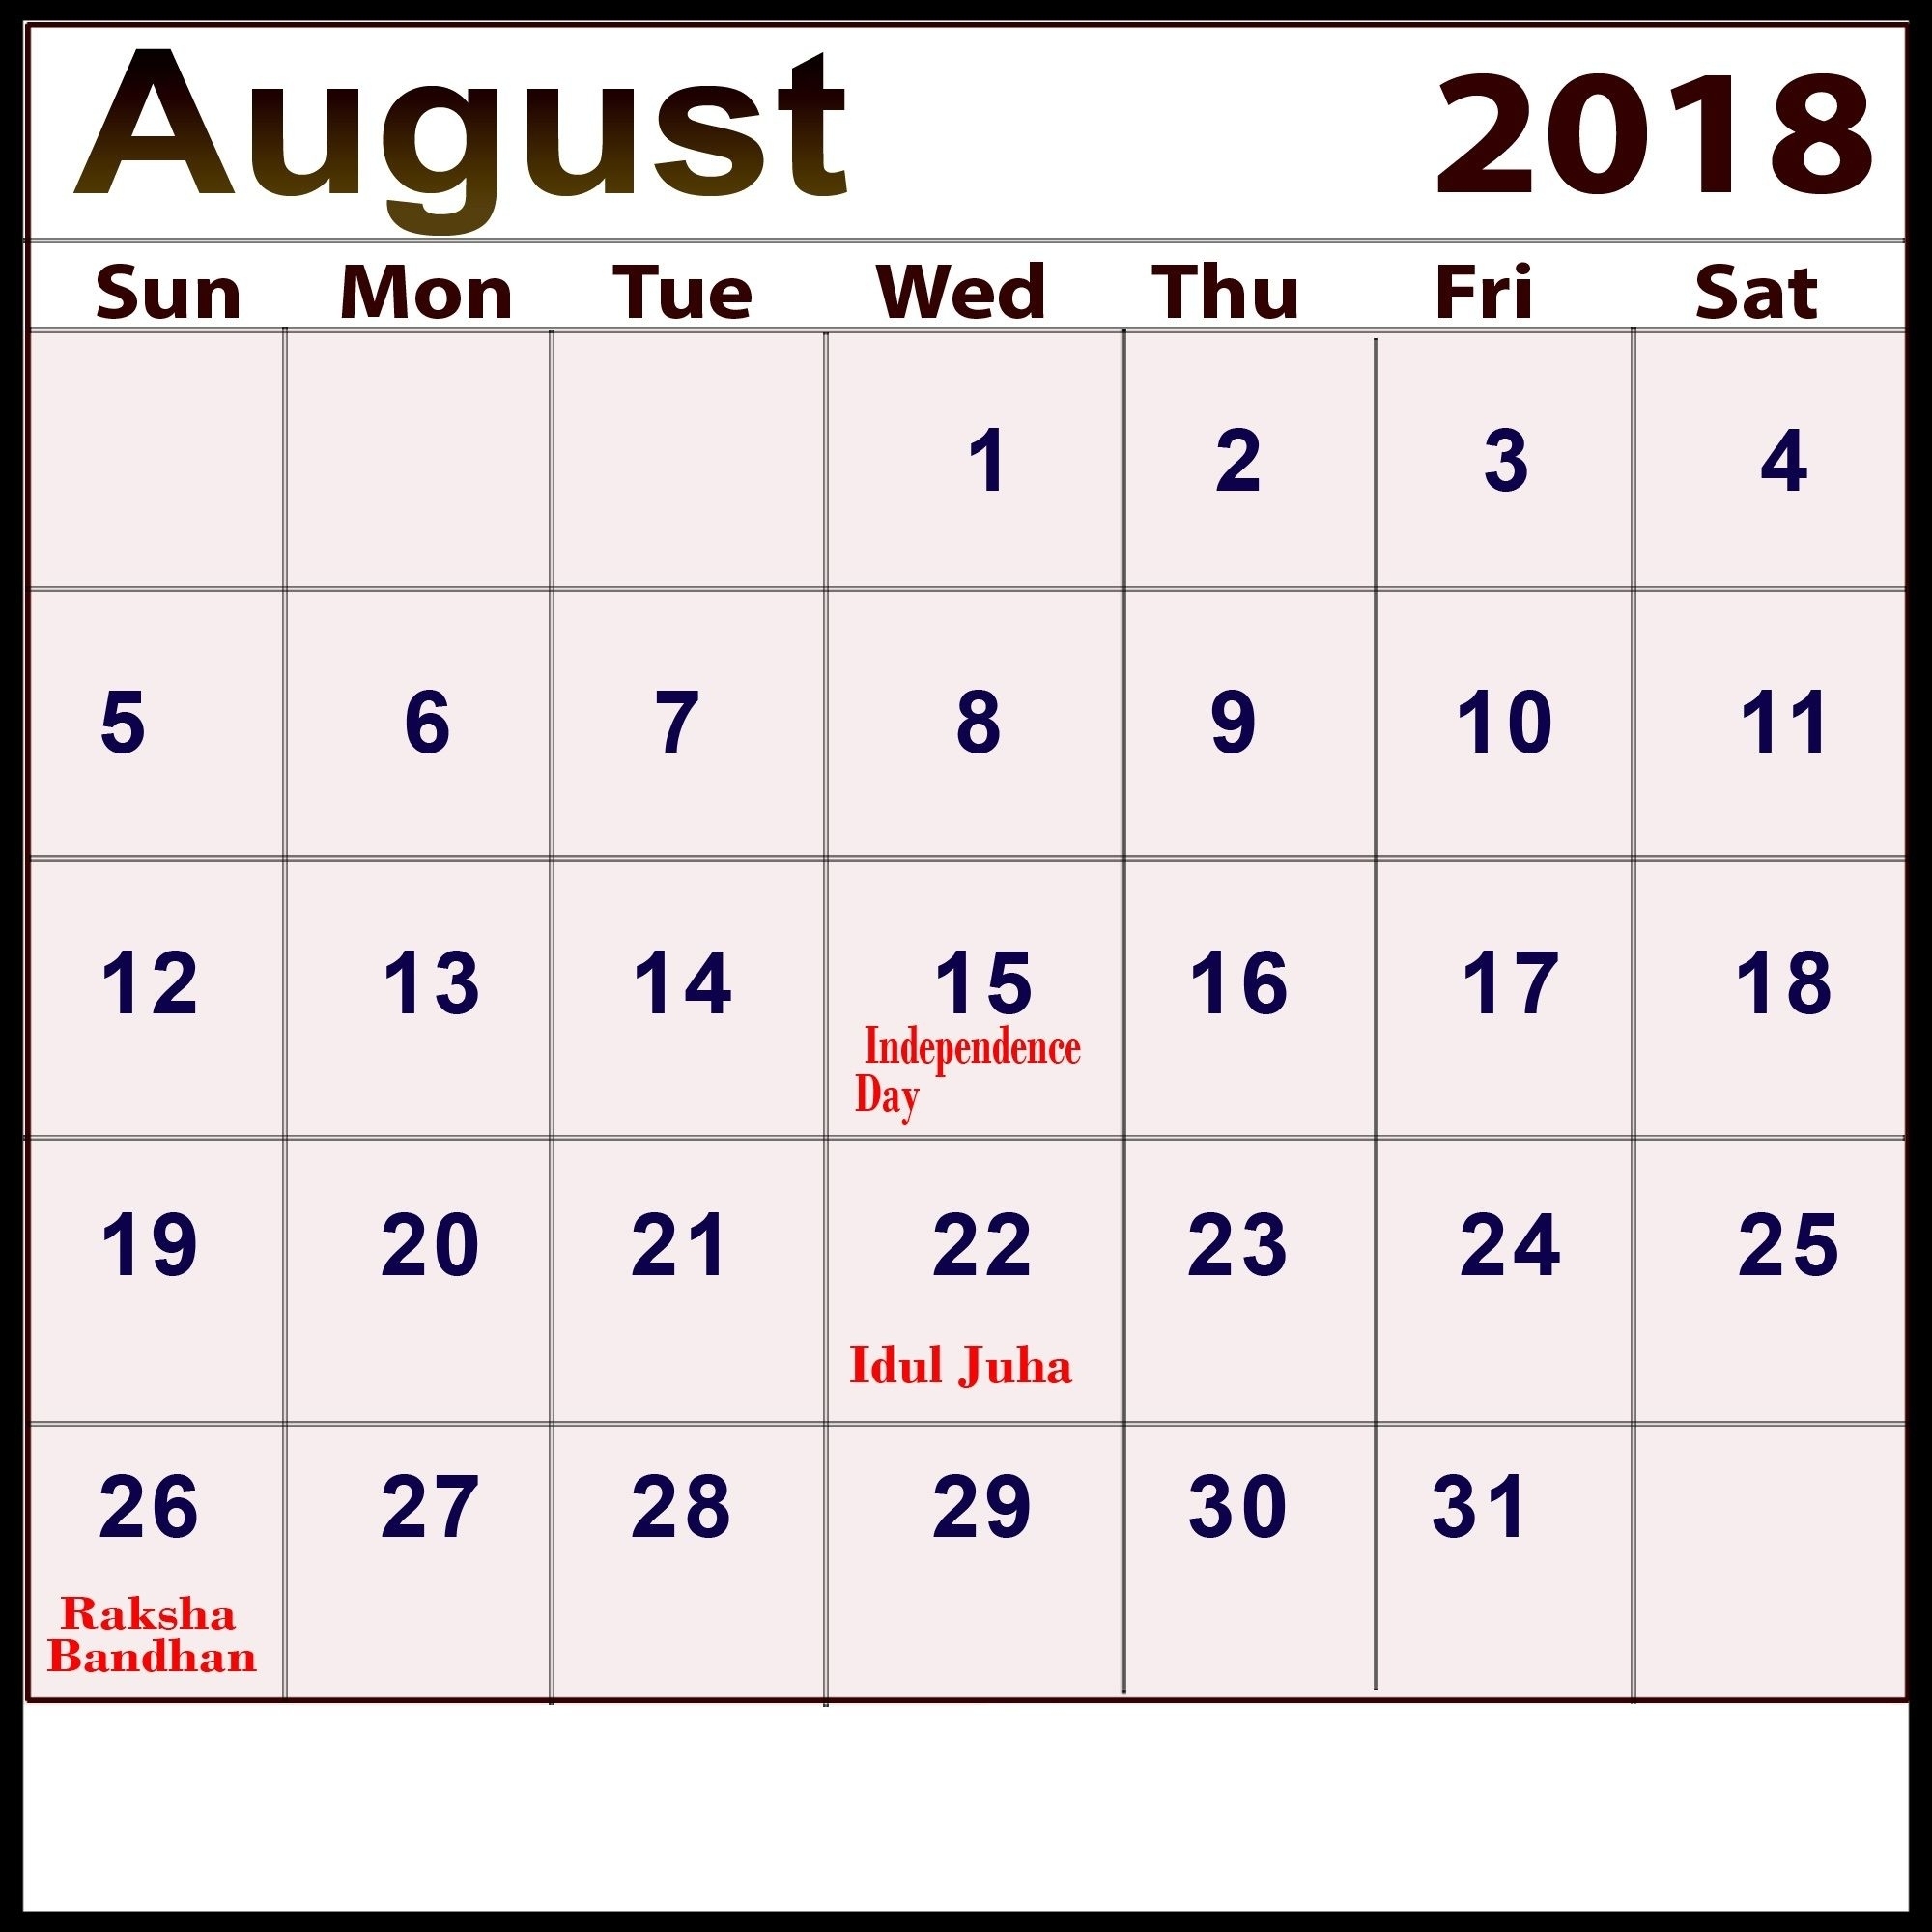 Holiday Calendar August | Jazz Gear Calendar Holidays For August